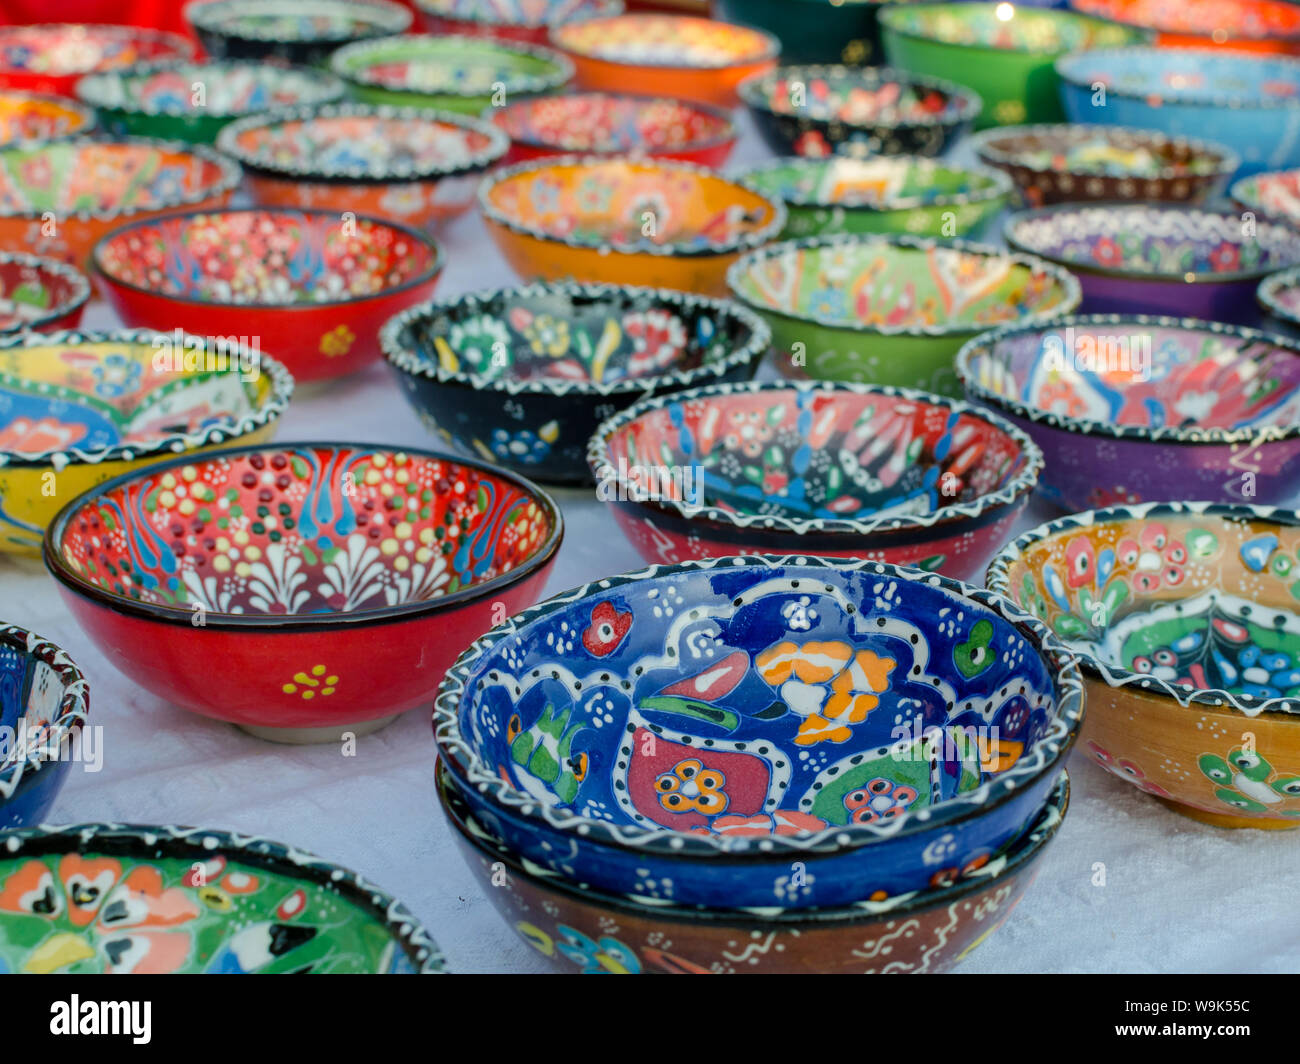 Turkish Handmade Colourful Ceramic Plates And Bowls Stock Photo Alamy